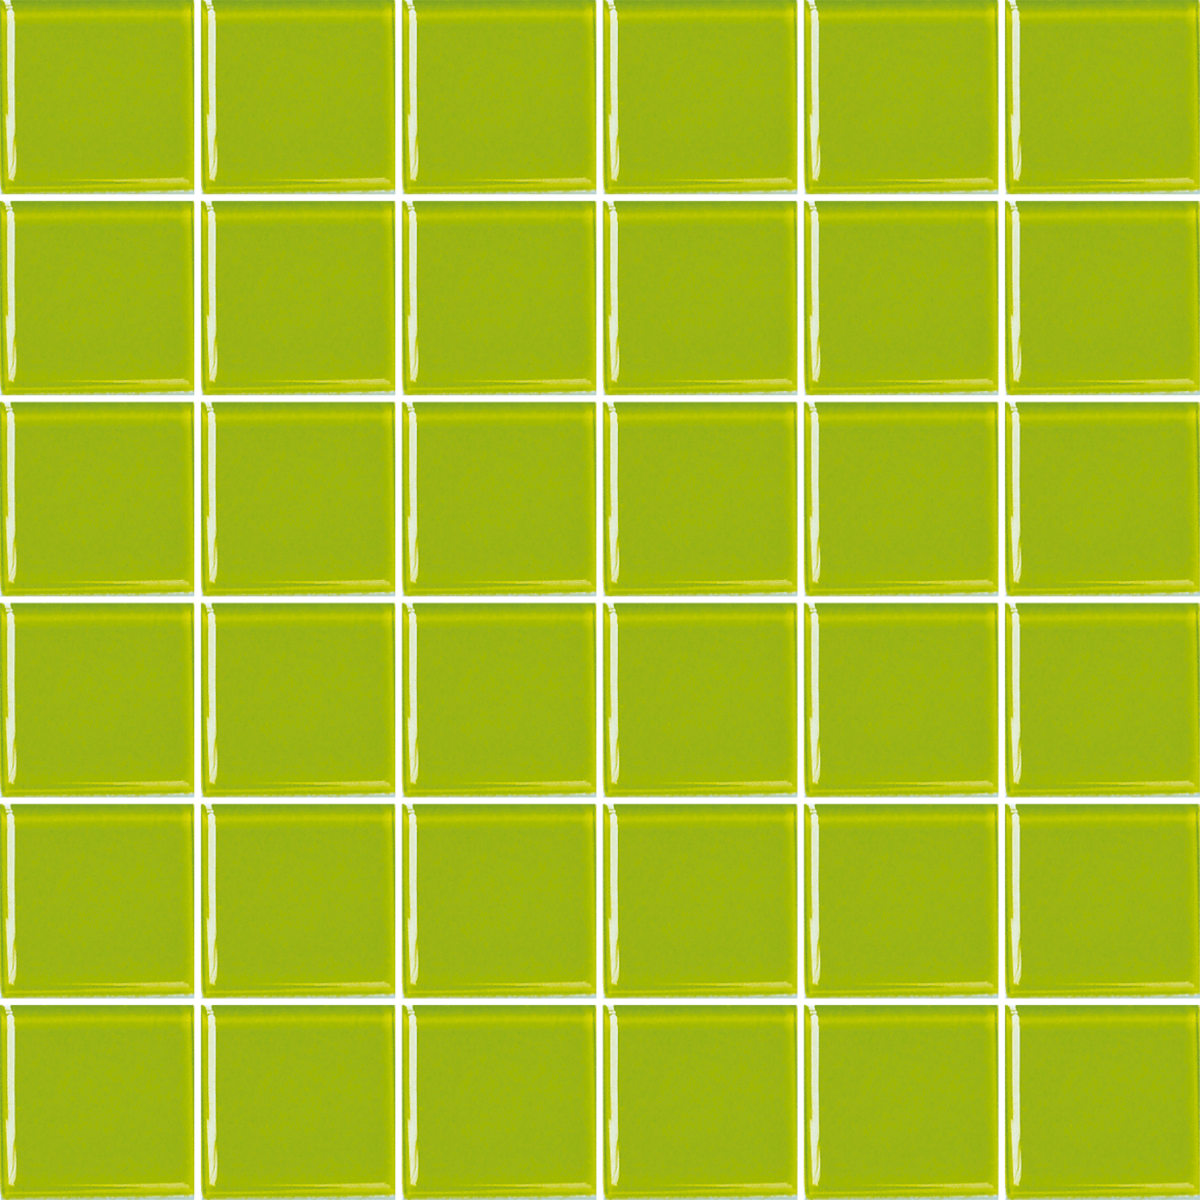 Skleněná mozaika Premium Mosaic zelená 31x31 cm lesk MOS50PI Premium Mosaic